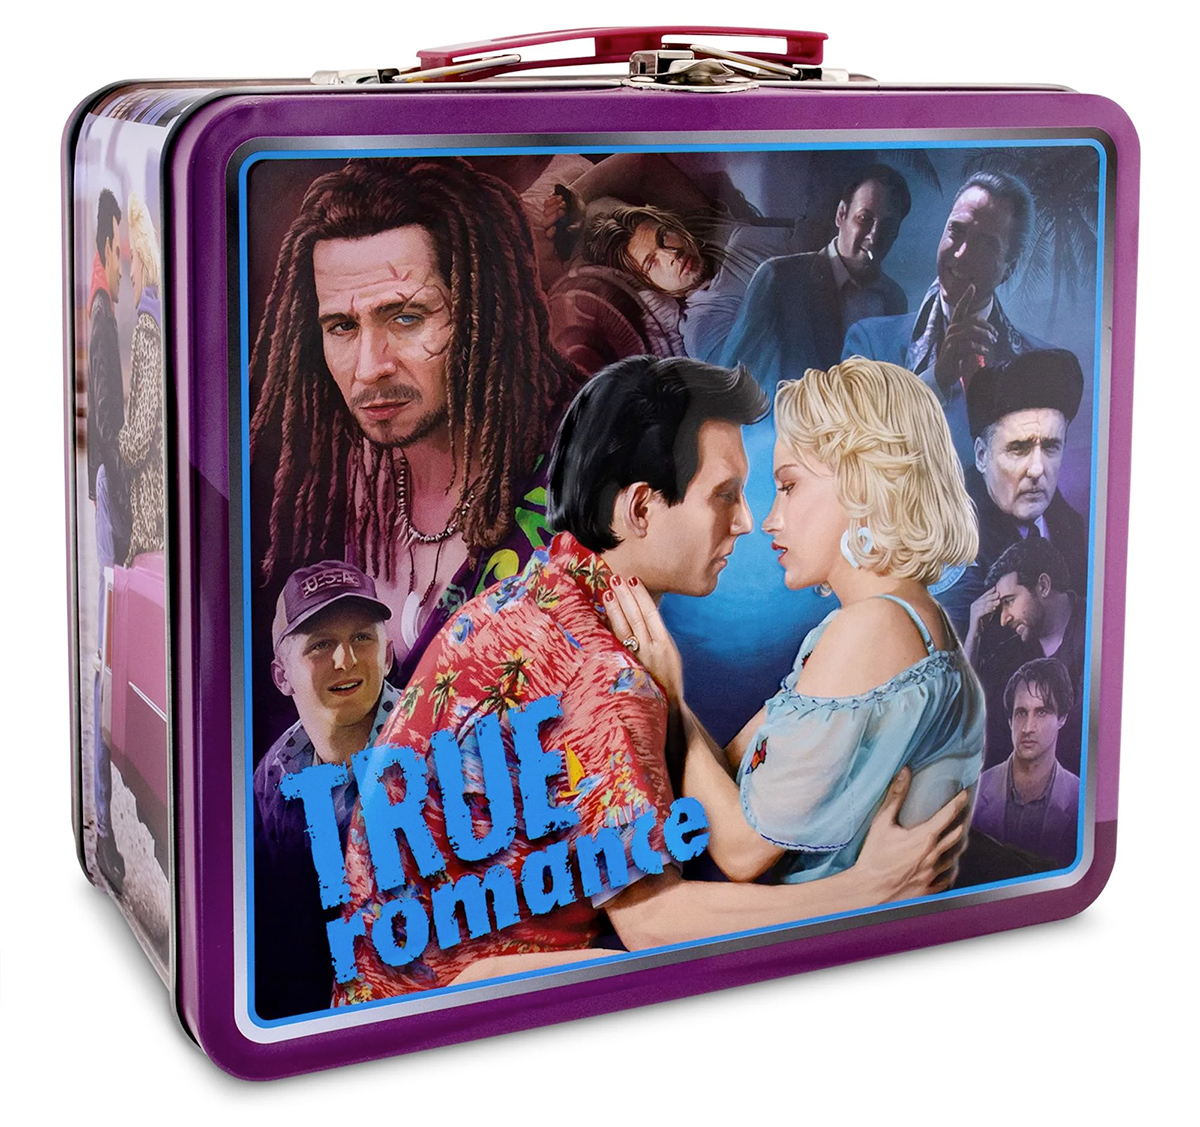 Lunch box from the movie True Romance by Tony Scott and Quentin Tarantino